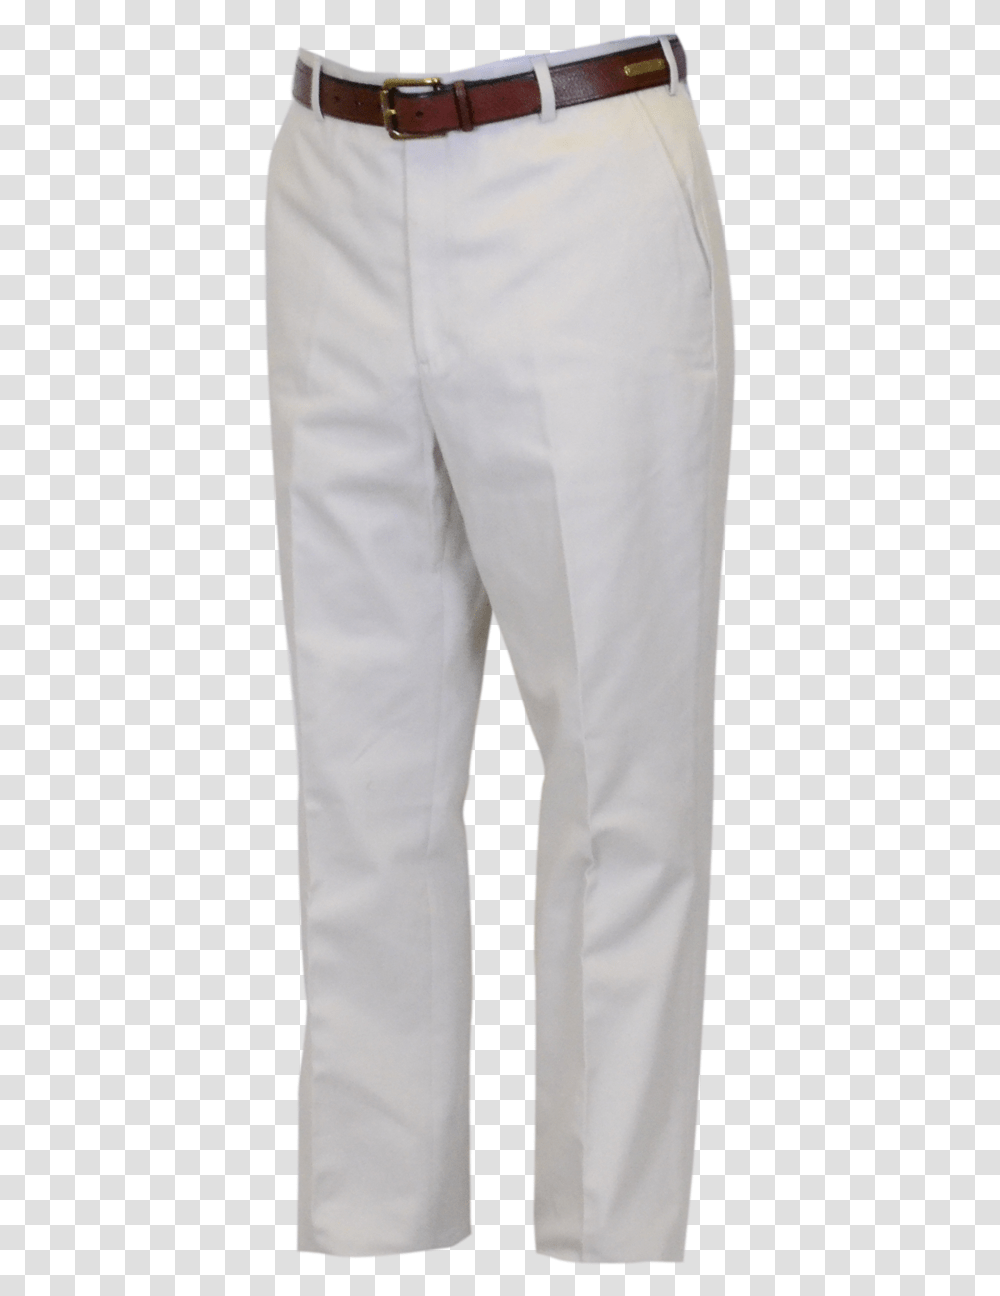 Trousers Picture Formal Pant, Pants, Apparel, Shorts Transparent Png